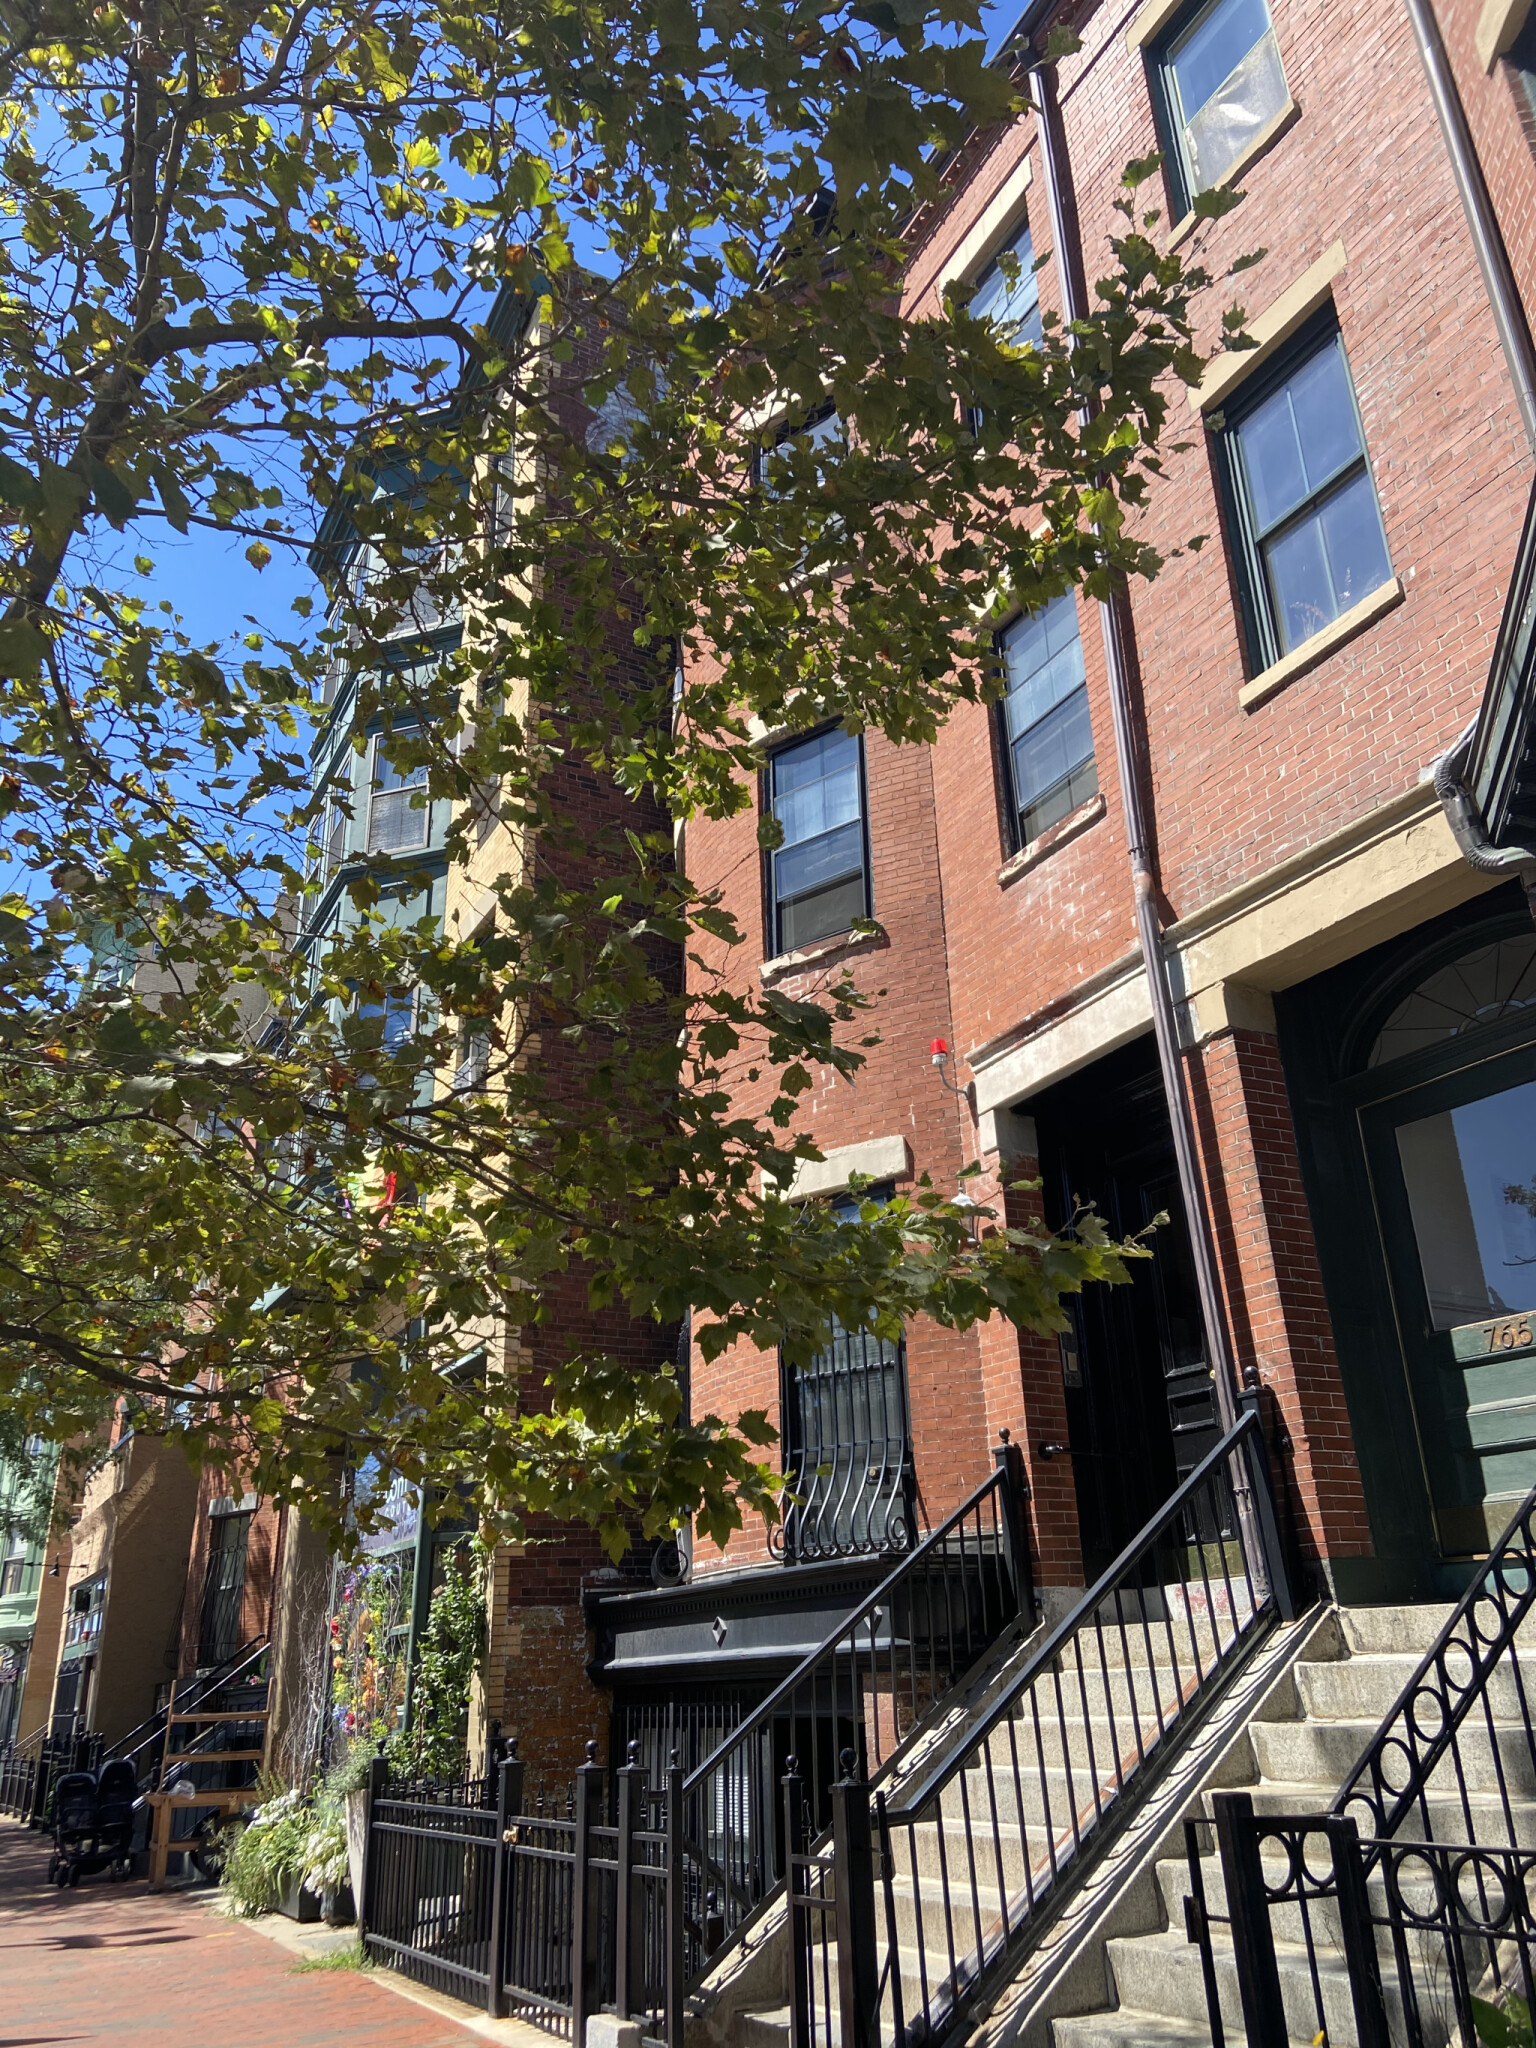 Photos of apartment on East Dedham St.,Boston MA 02118